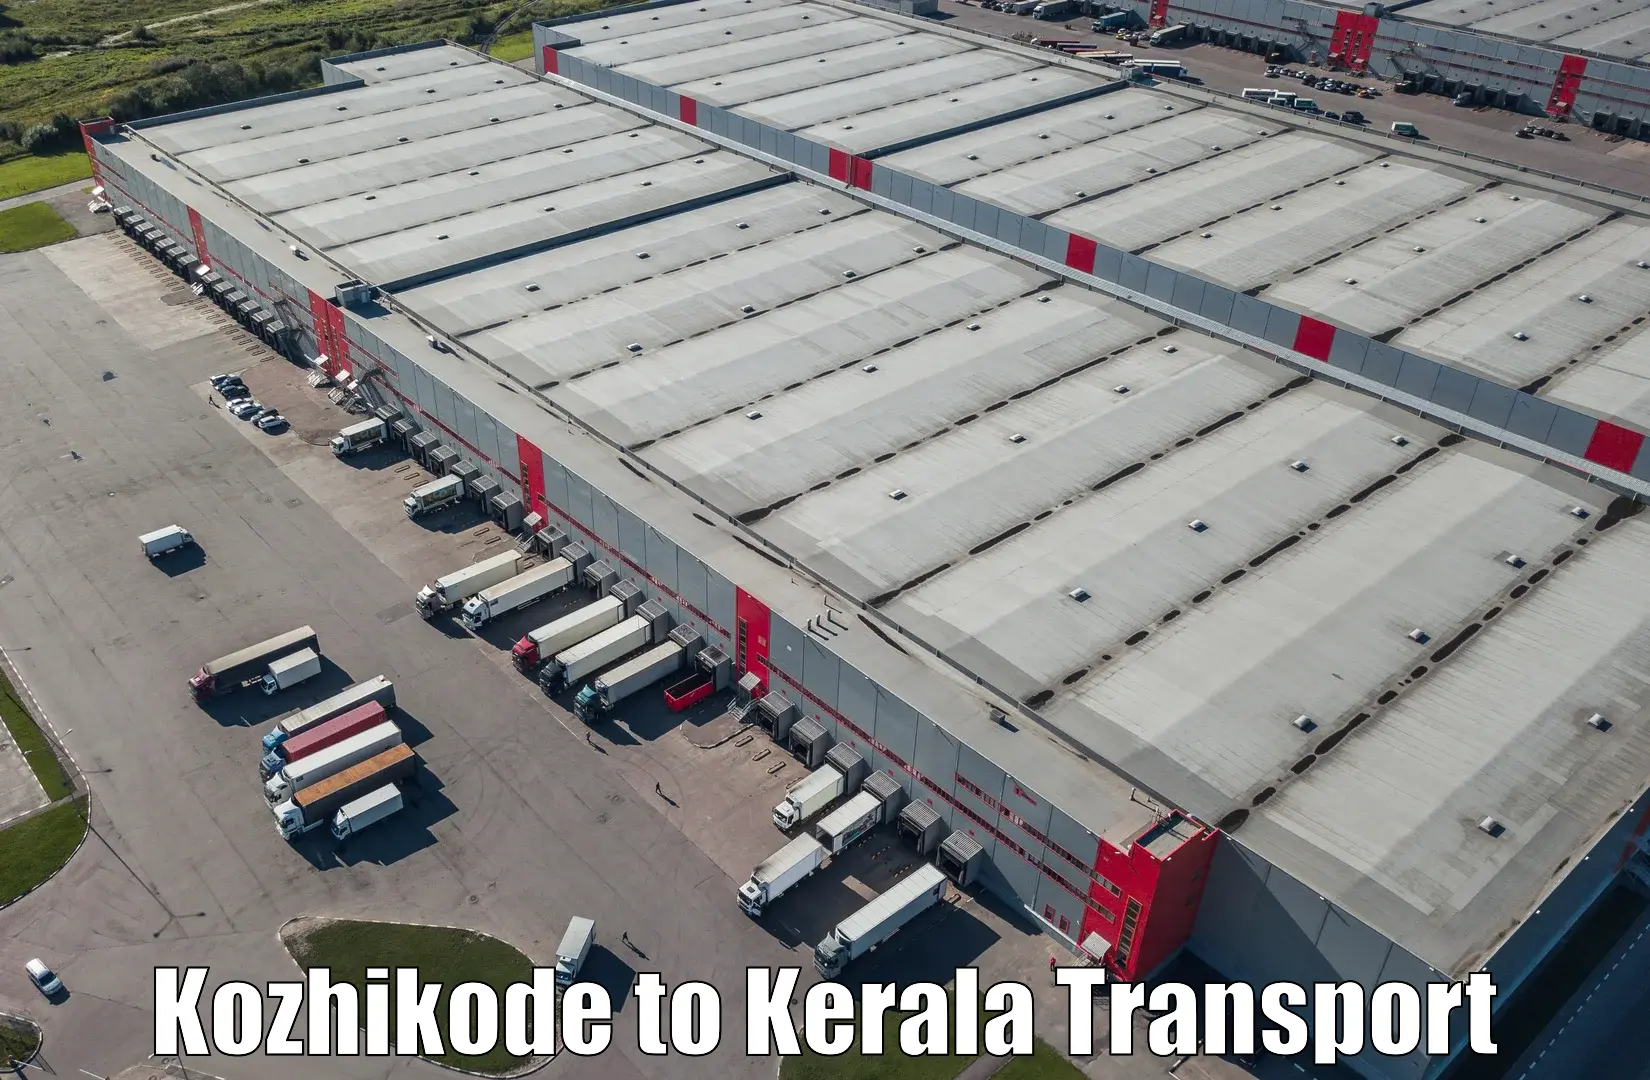 Nearby transport service Kozhikode to Calicut